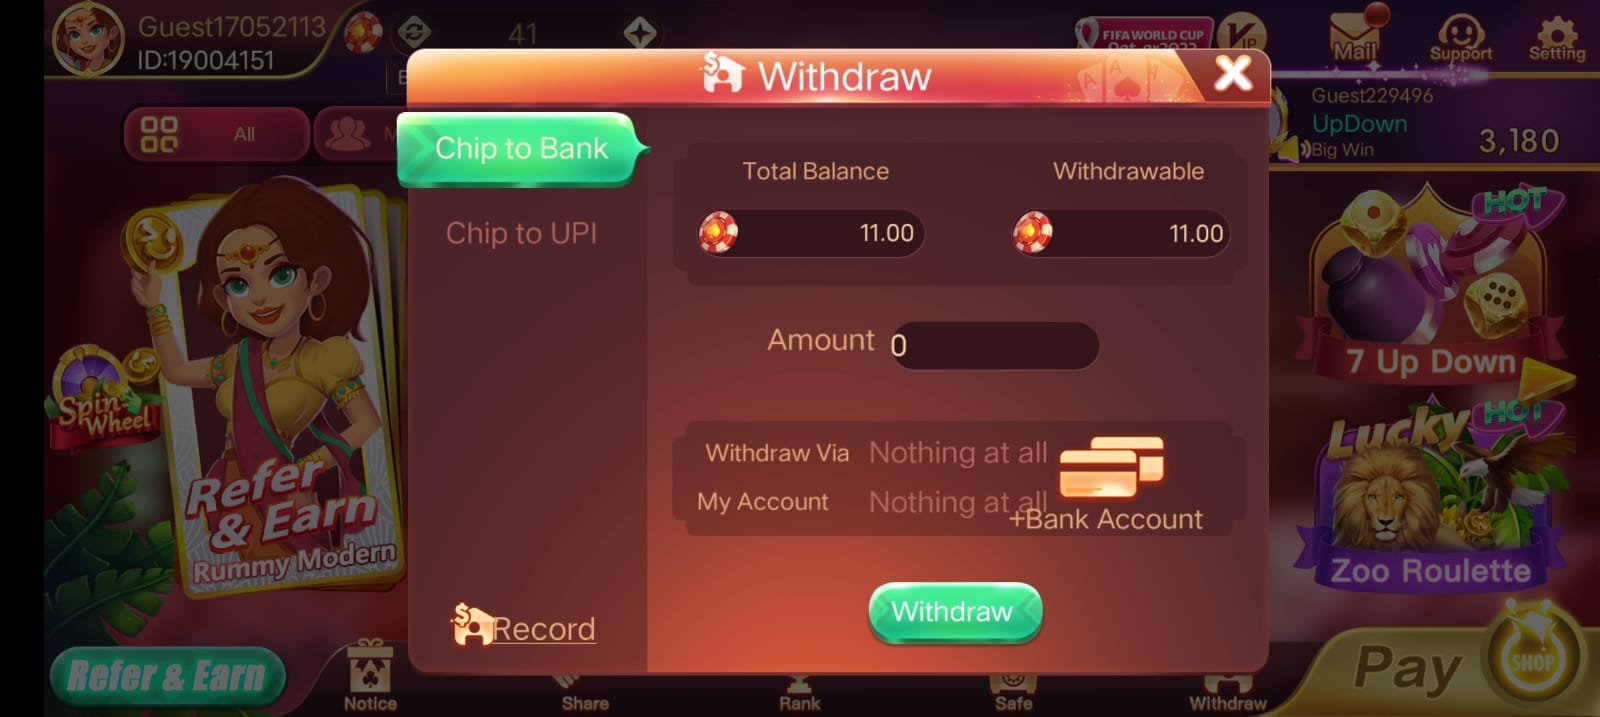 Withdraw Cash Program In Rummy Modern App